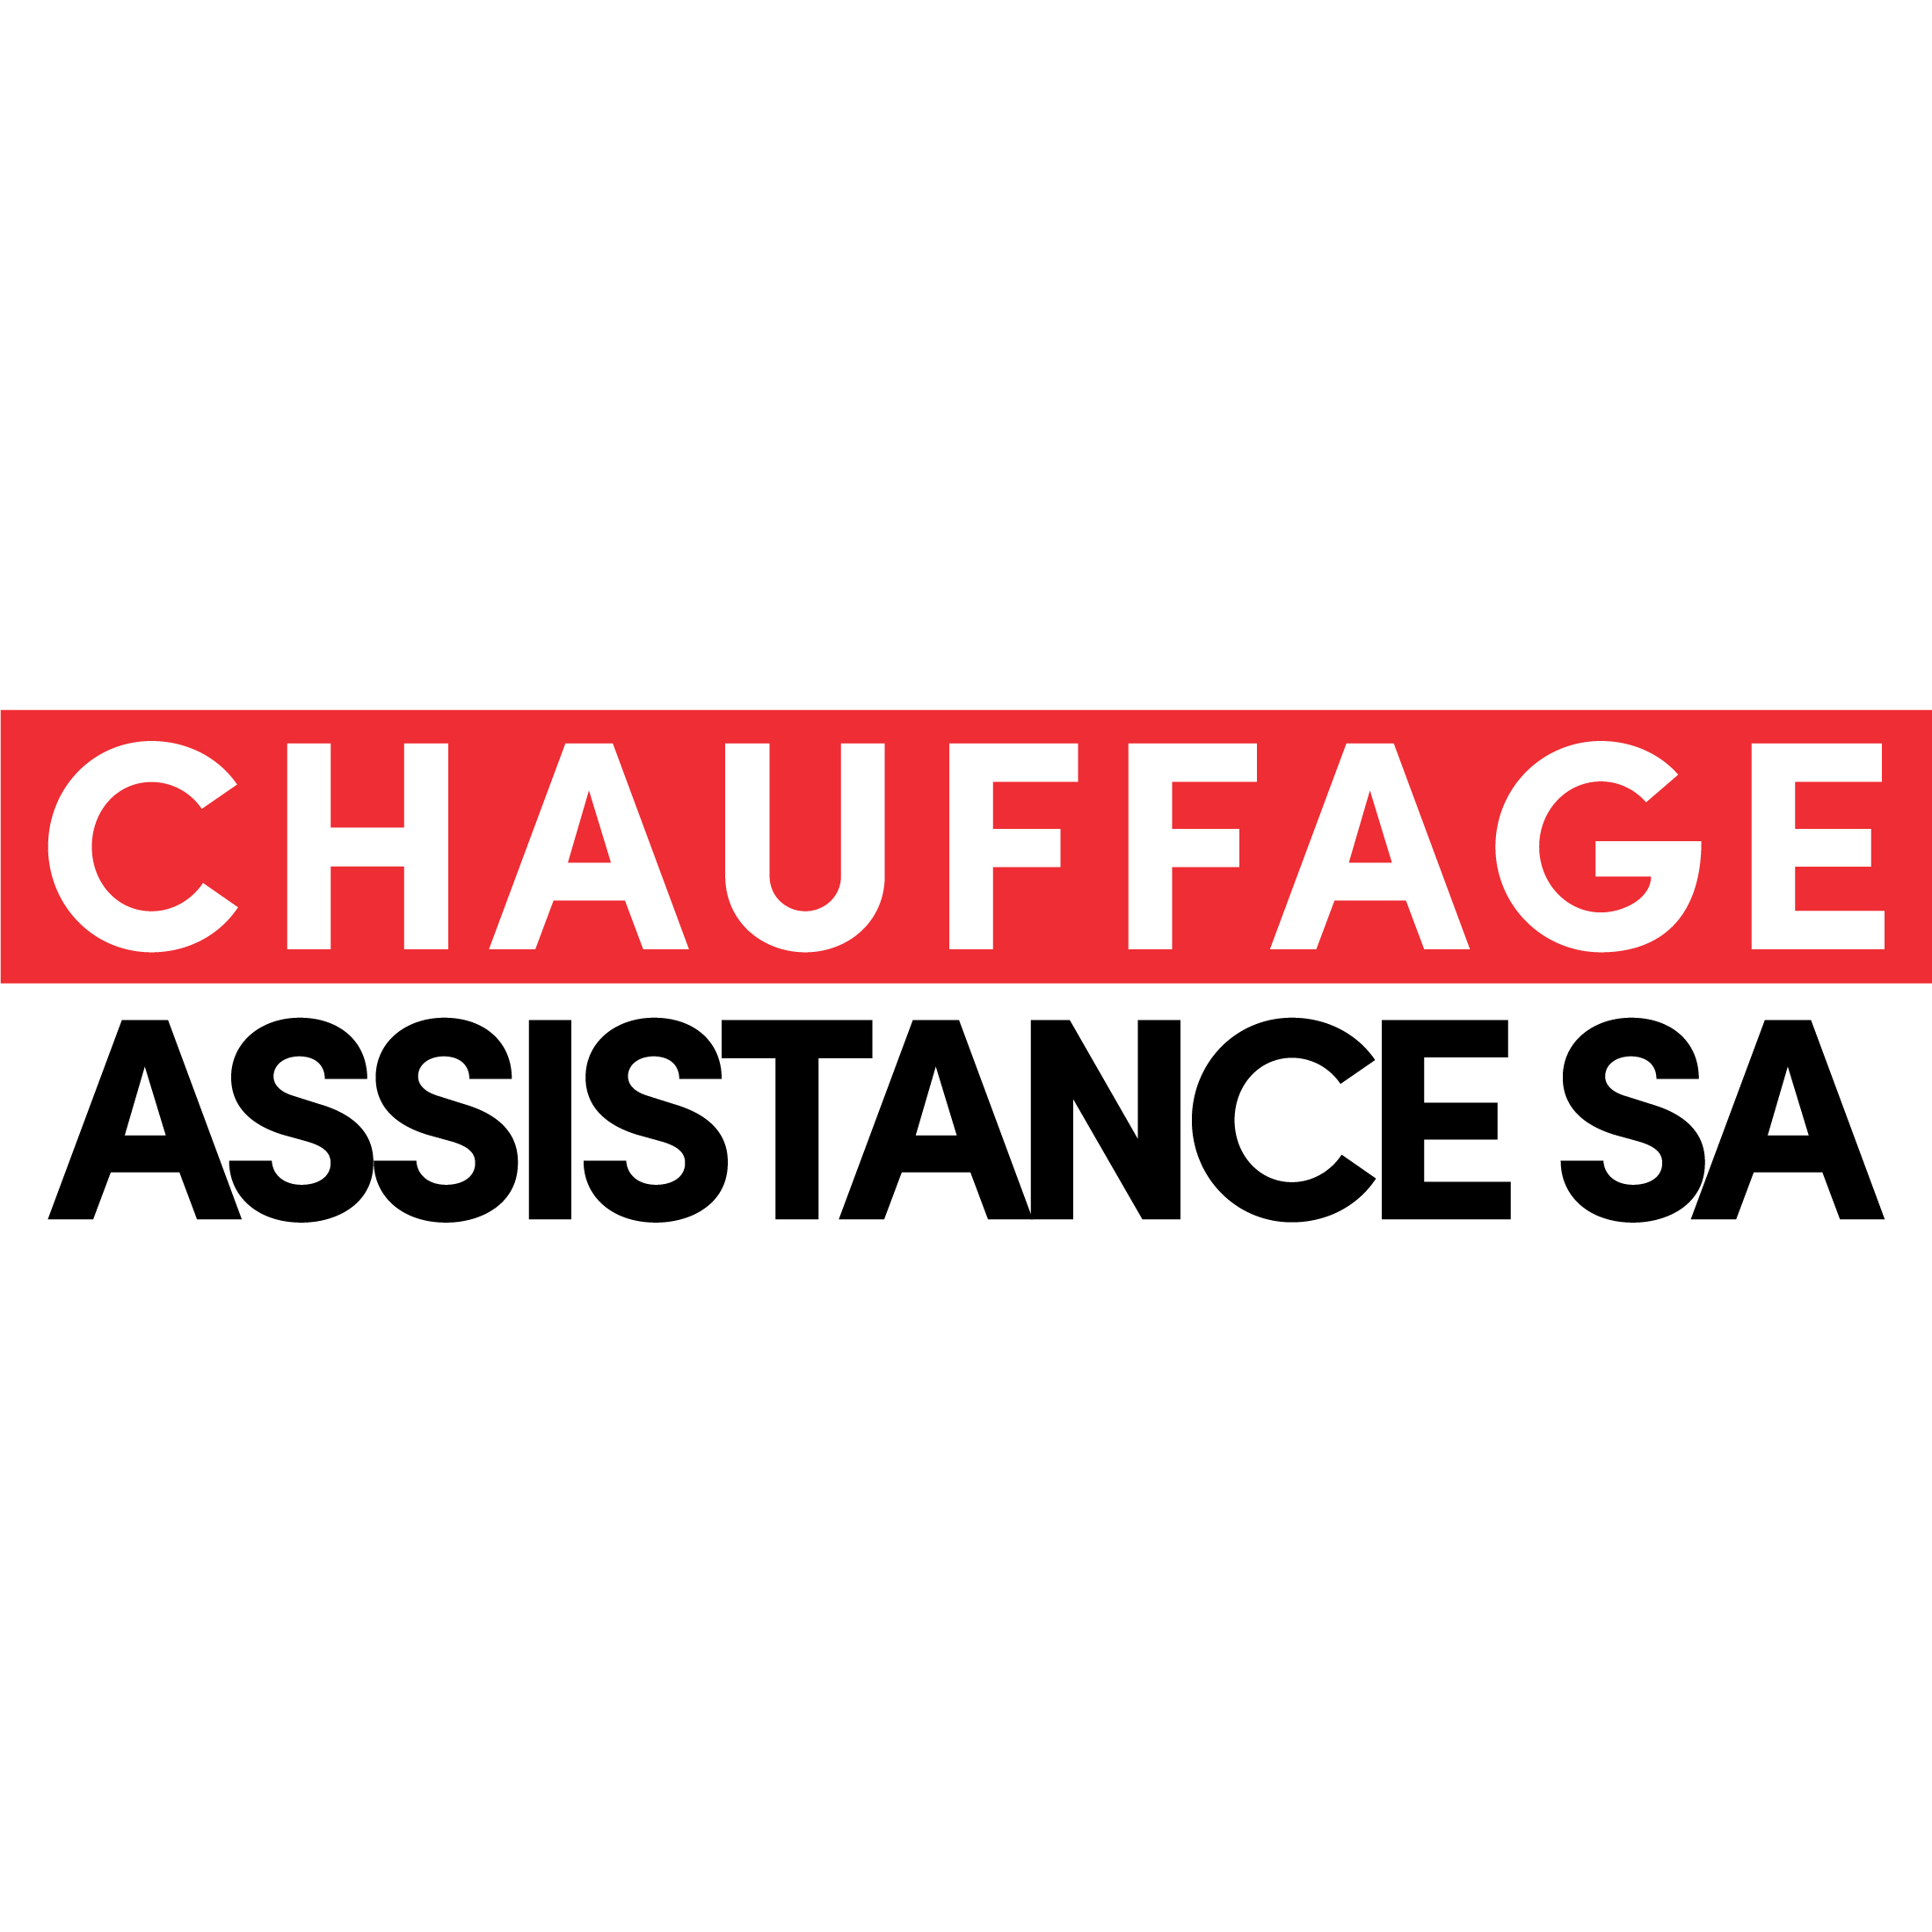 Chauffage Assistance SA - Hvac Contractor - Genève - 022 338 35 25 Switzerland | ShowMeLocal.com